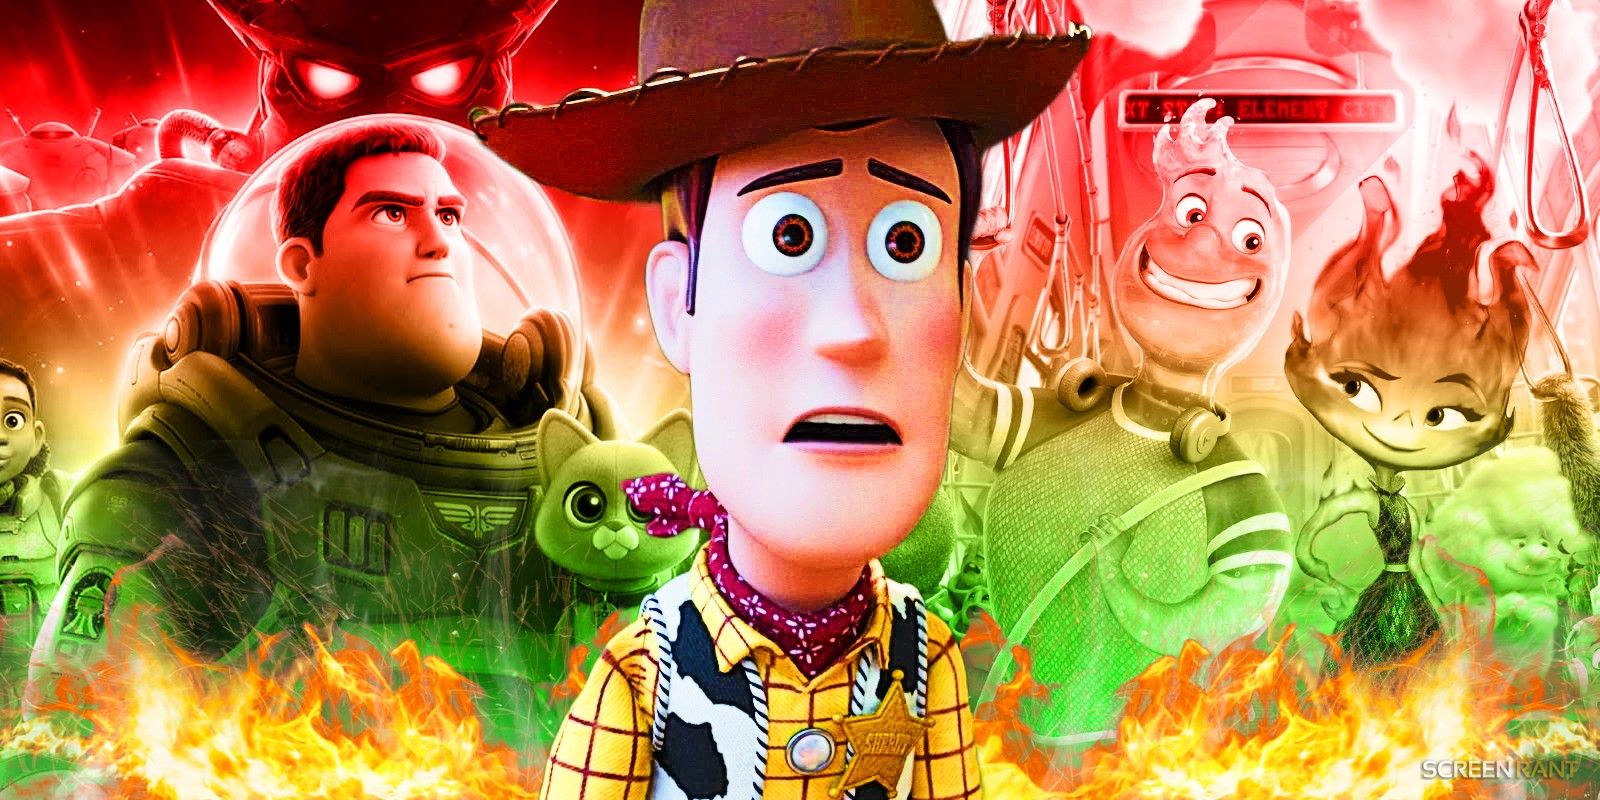 Film Pixar Box Office Setelah Toy Story 4